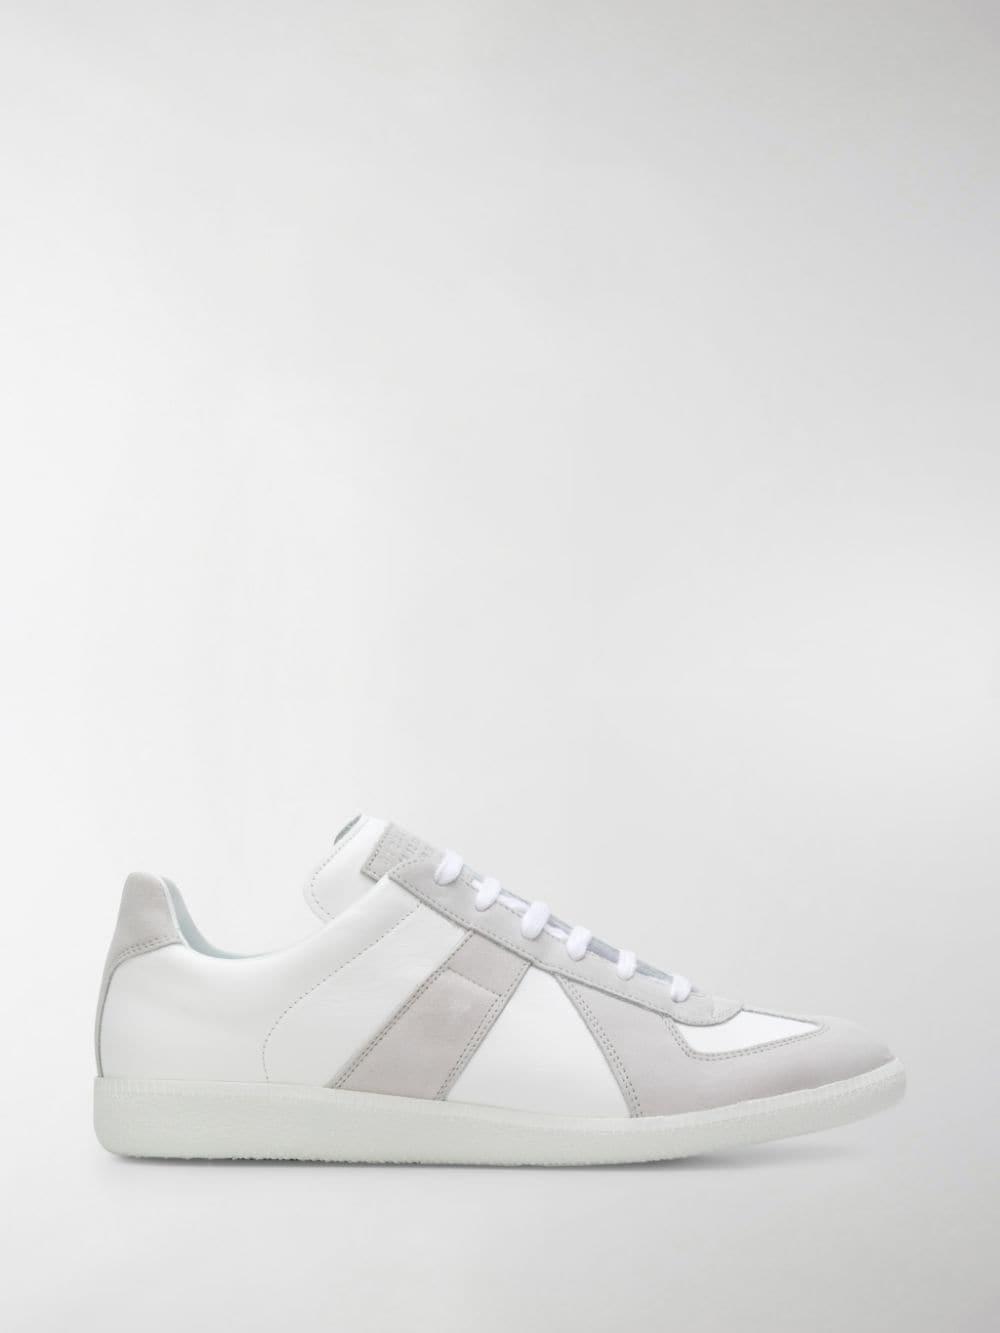 Maison Margiela Replica Sneakers in White for Men - Lyst